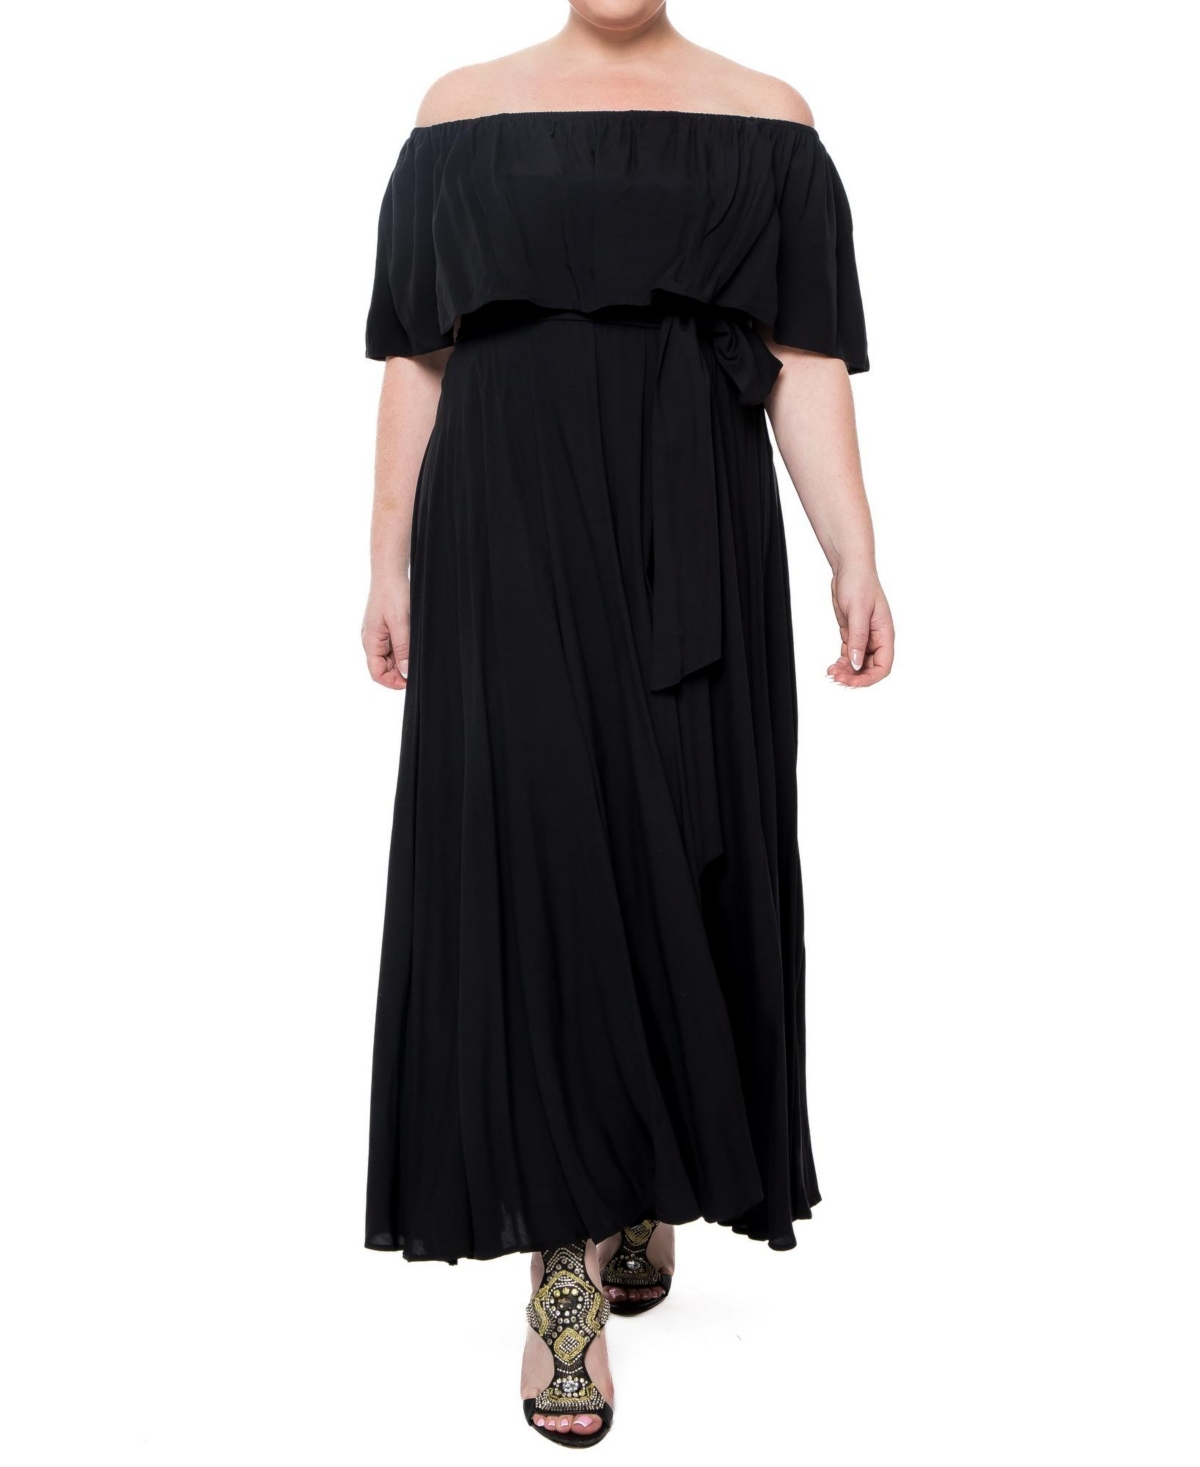 Women's Morning Glory Maxi Dress - Black